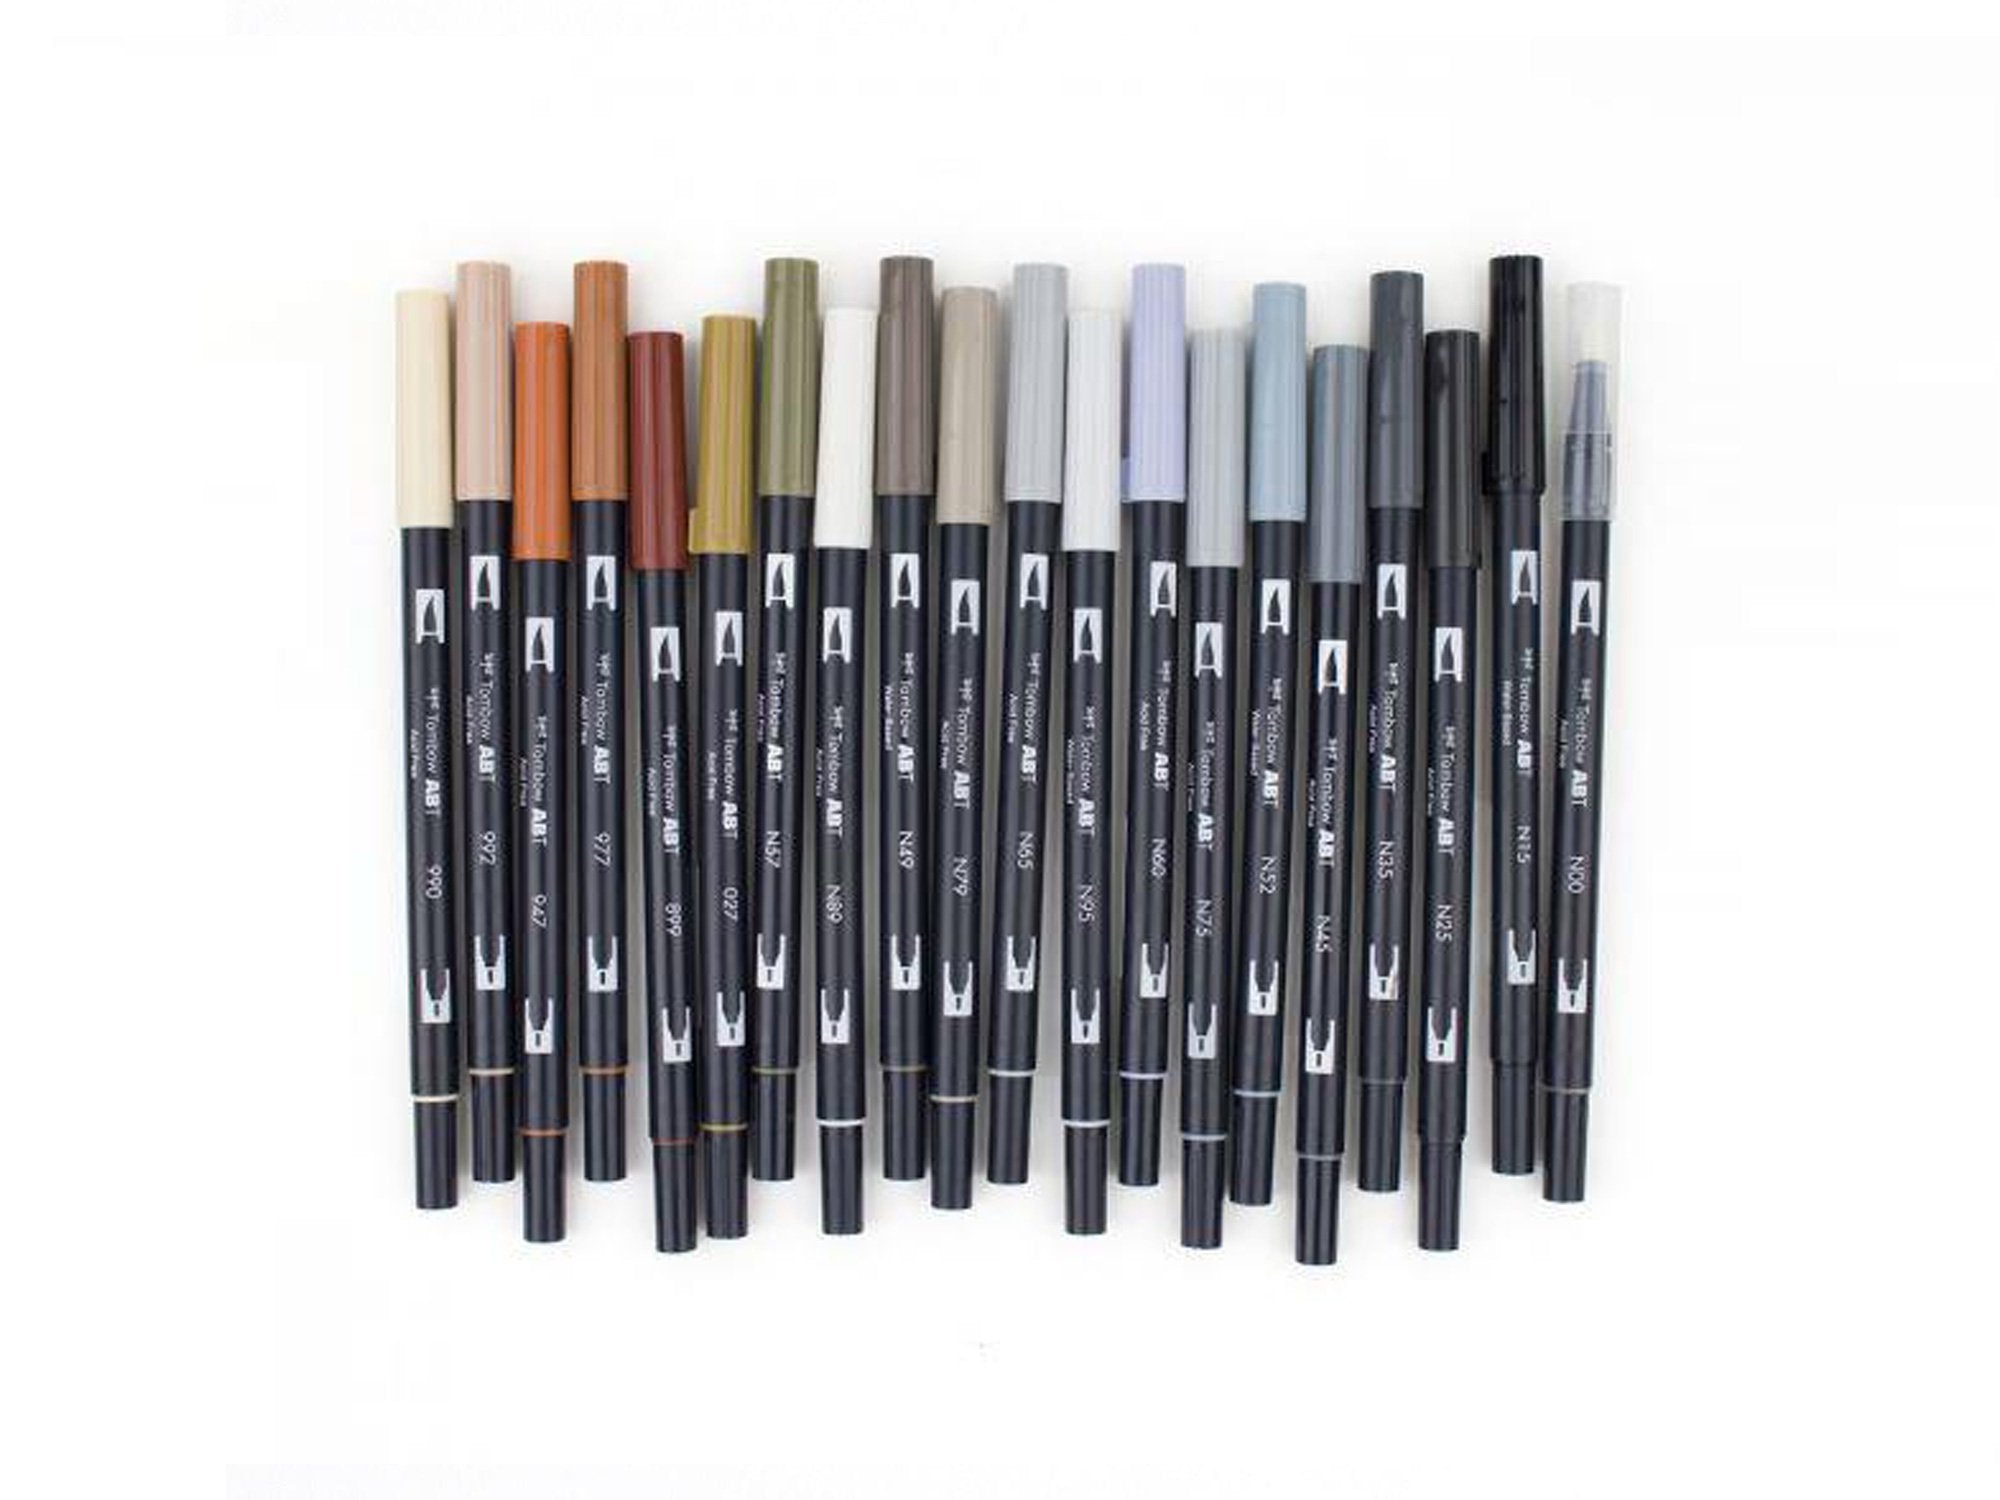 Tombow Dual End Brush Pen Sets